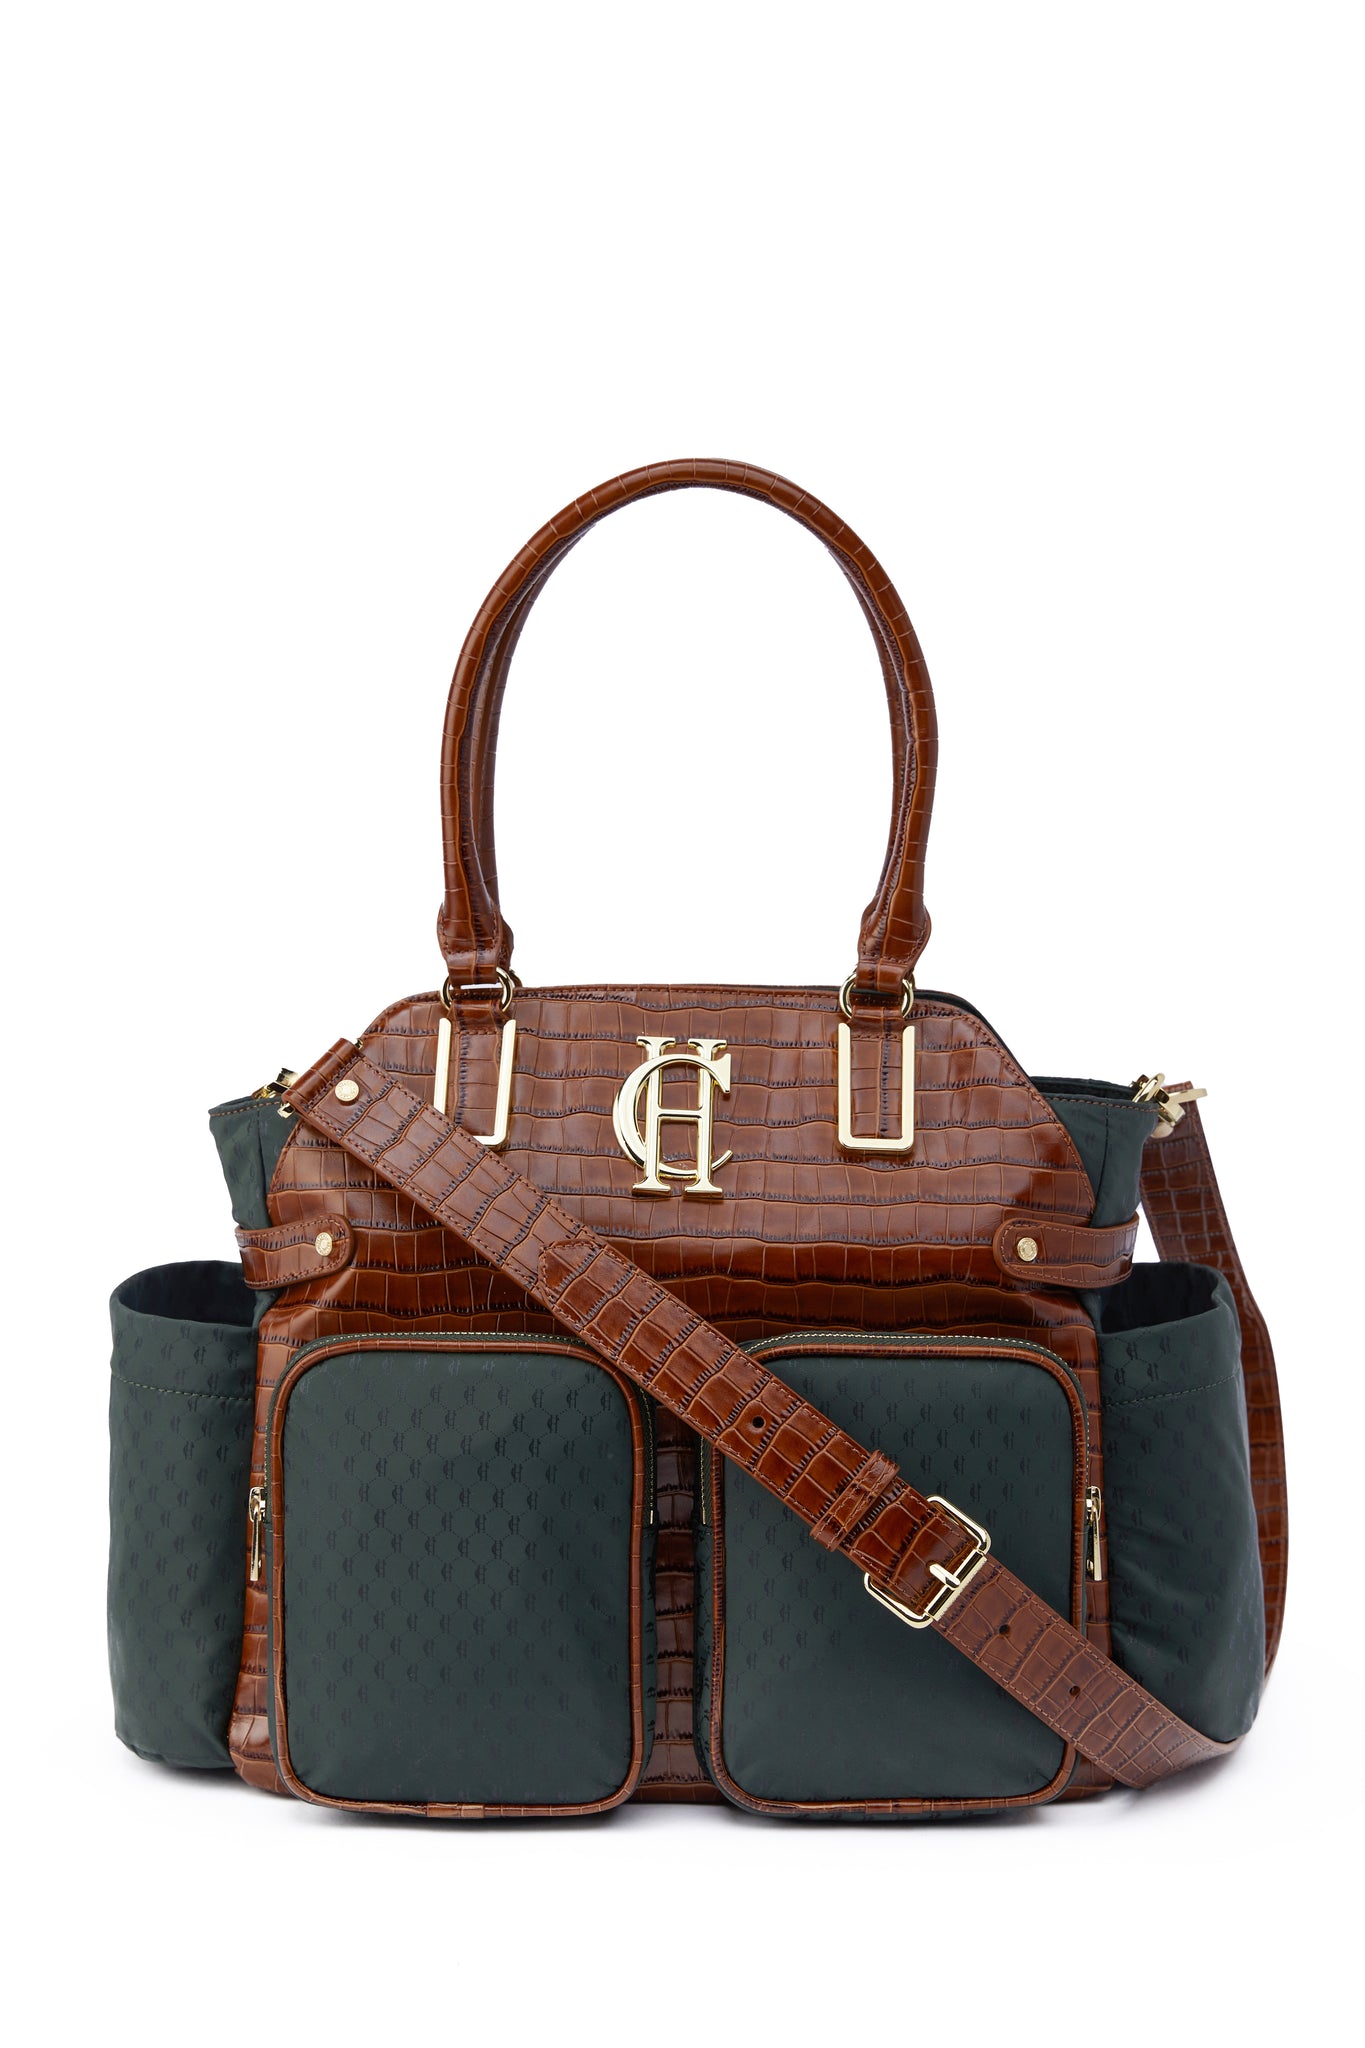 Louis VUITTON Travel bag. Wear. 34 x 59 cm